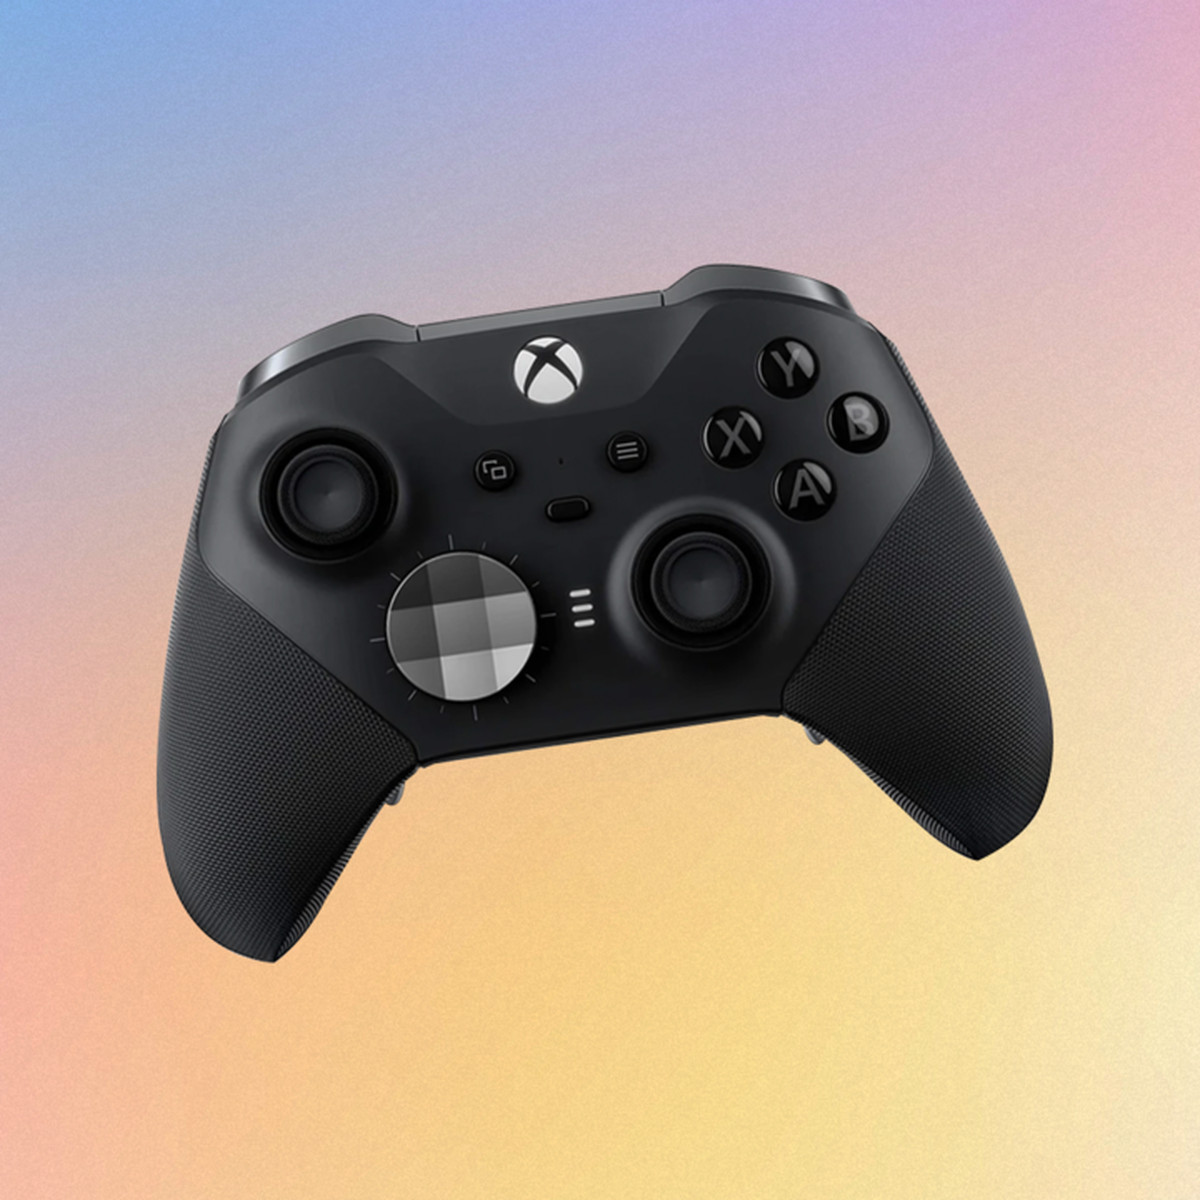 The Microsoft Xbox Elite Black Series 2 wireless controller on a rainbow background.